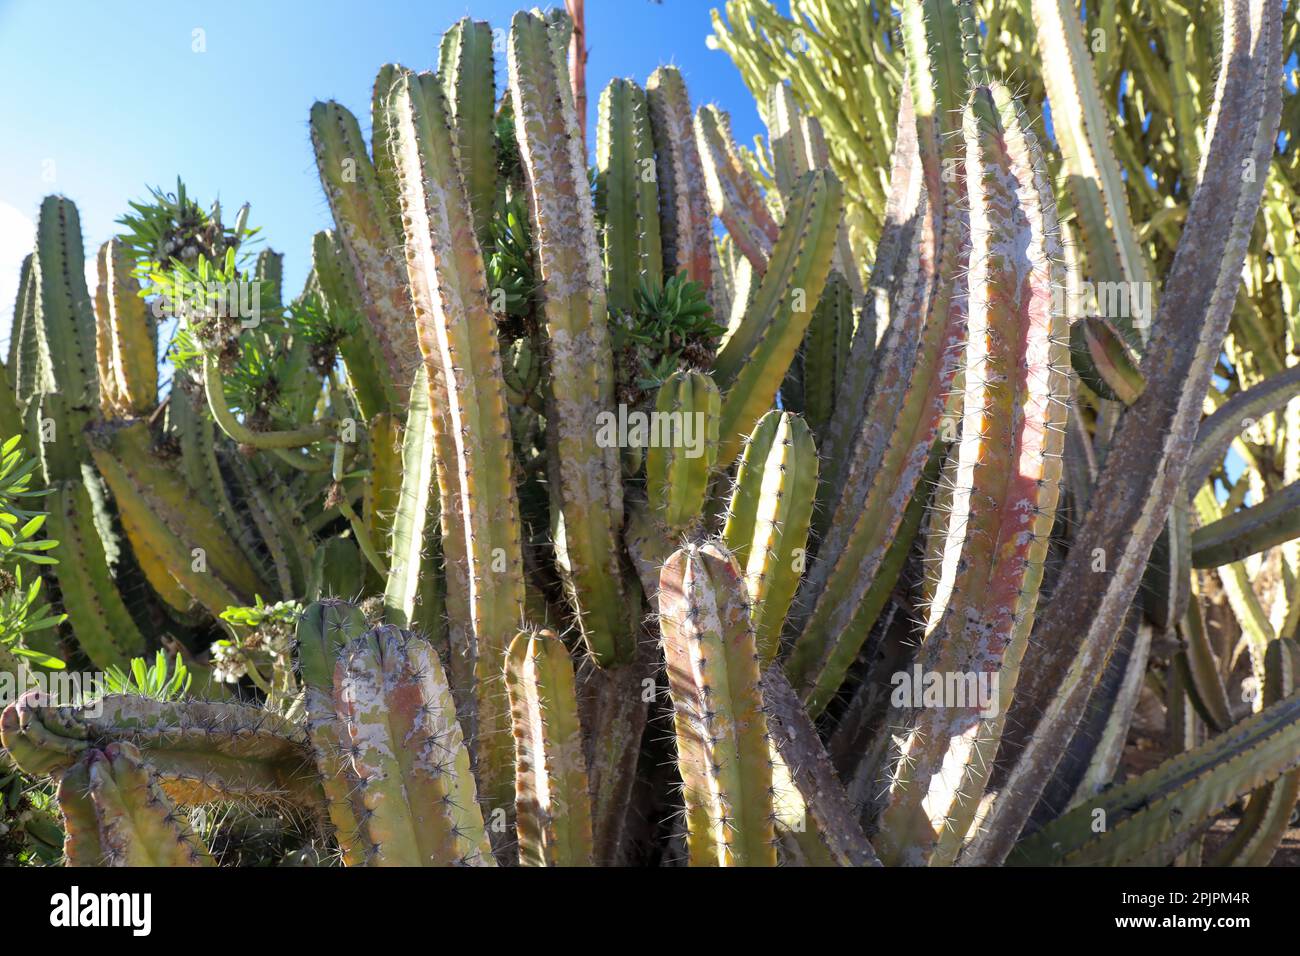 Close-up detail of the Euphorbia Resinifera cactus Stock Photo